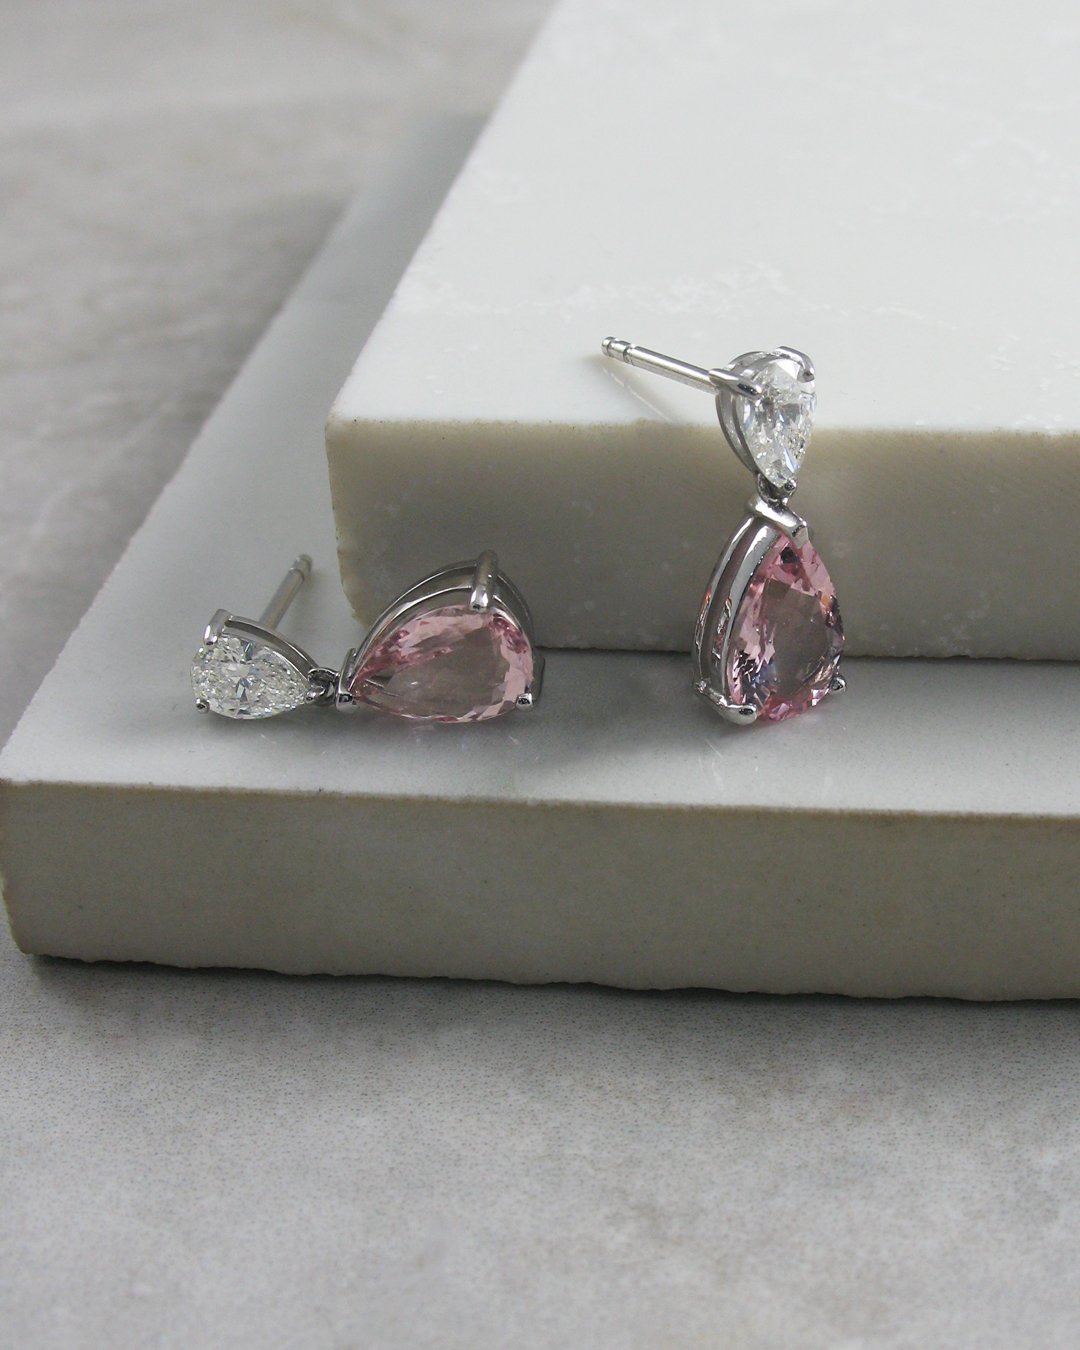 A vibrant transparent peach pink pair of morganite drop earrings